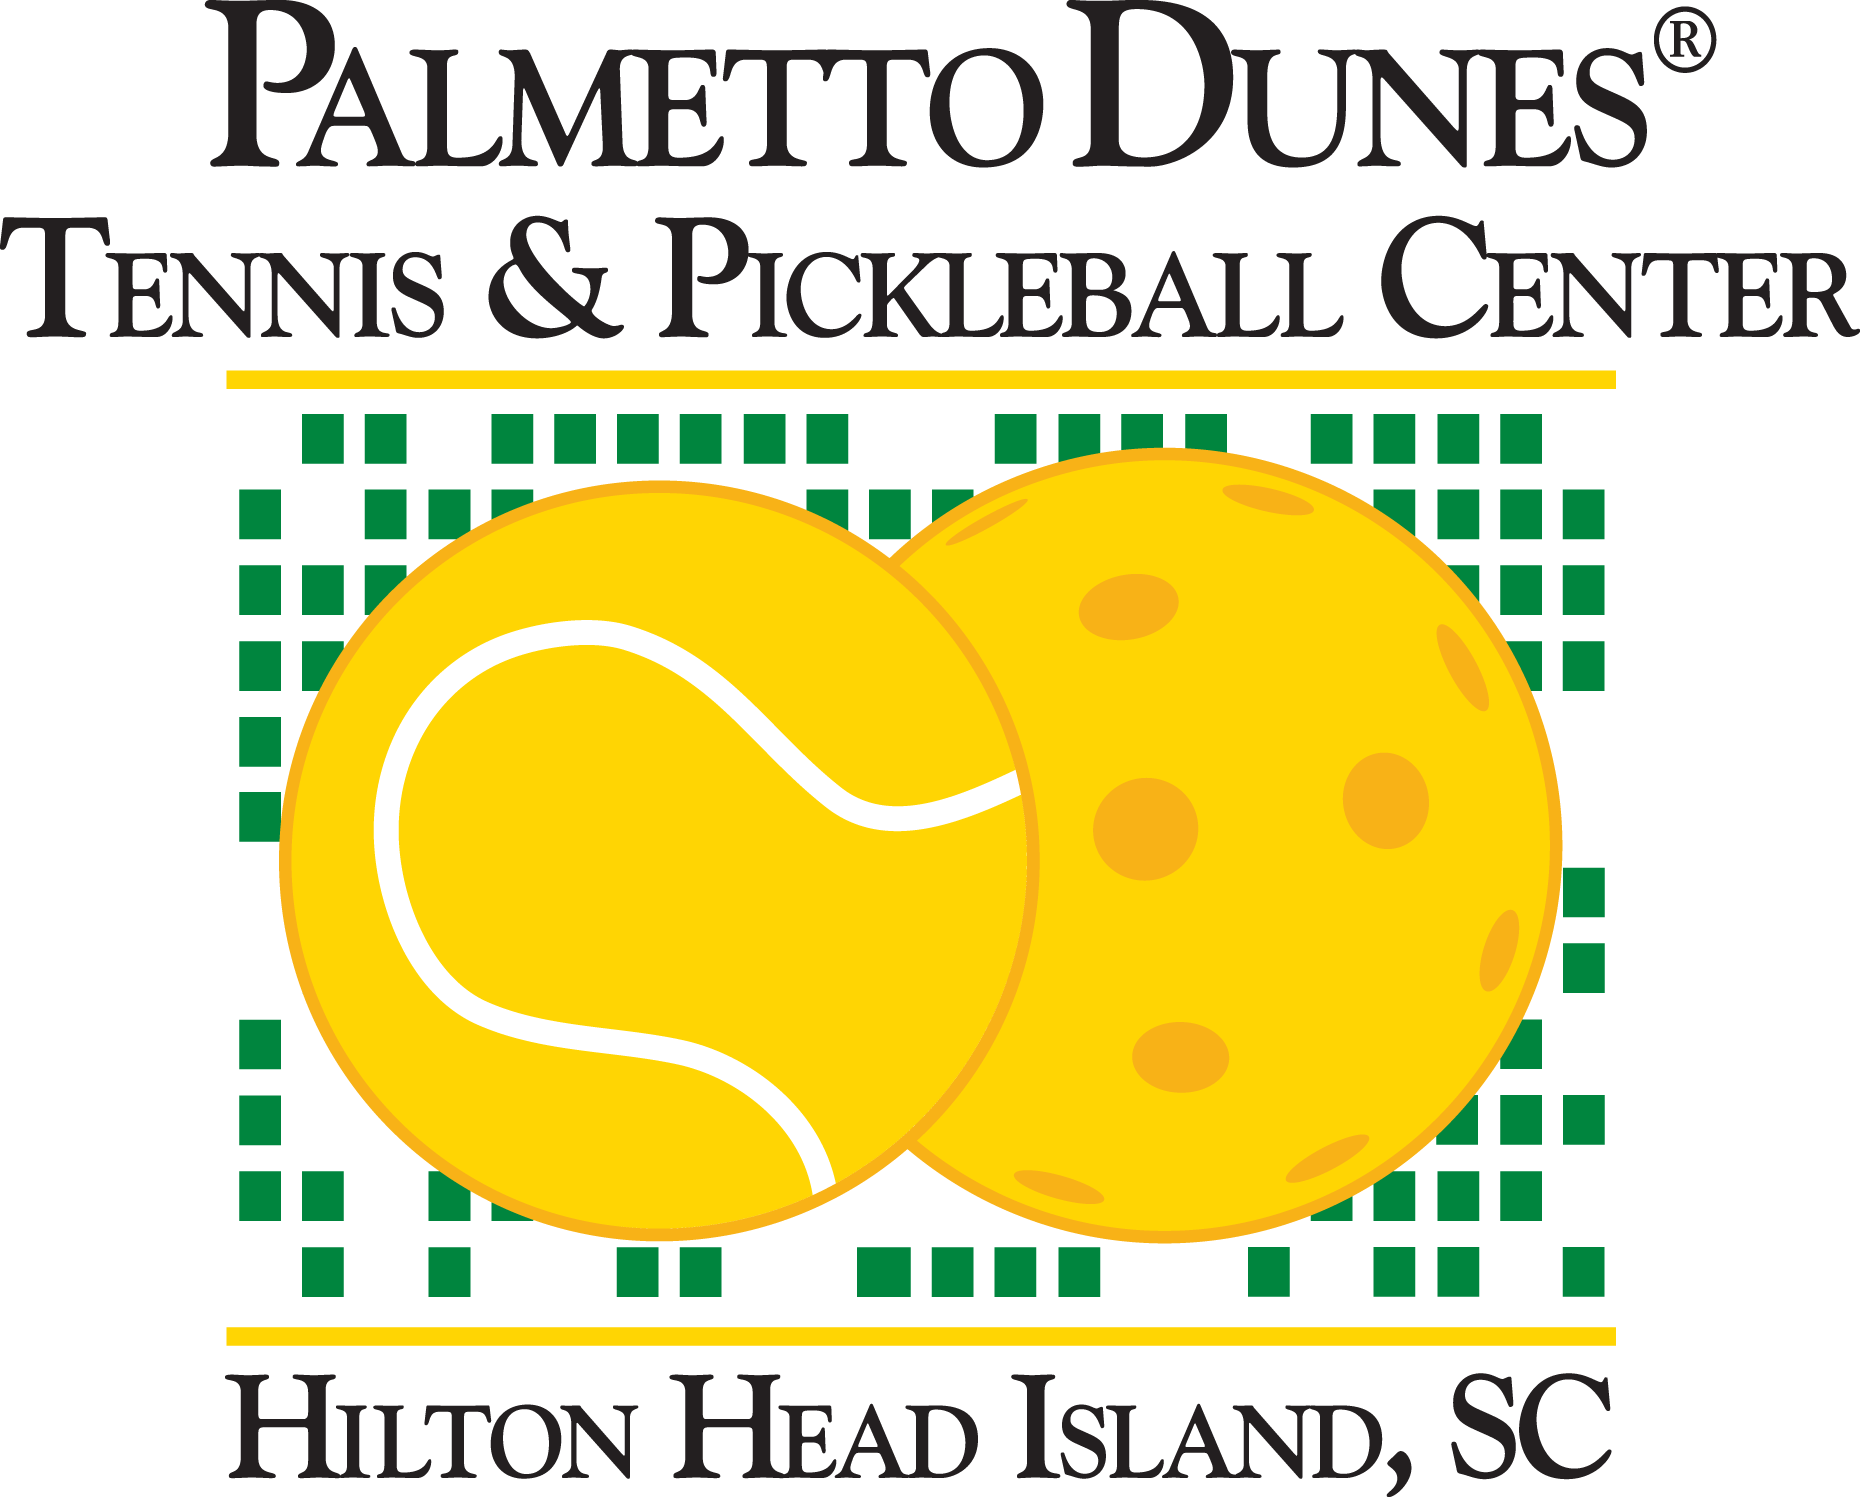 Palmetto Dunes Tennis & Pickleball Center